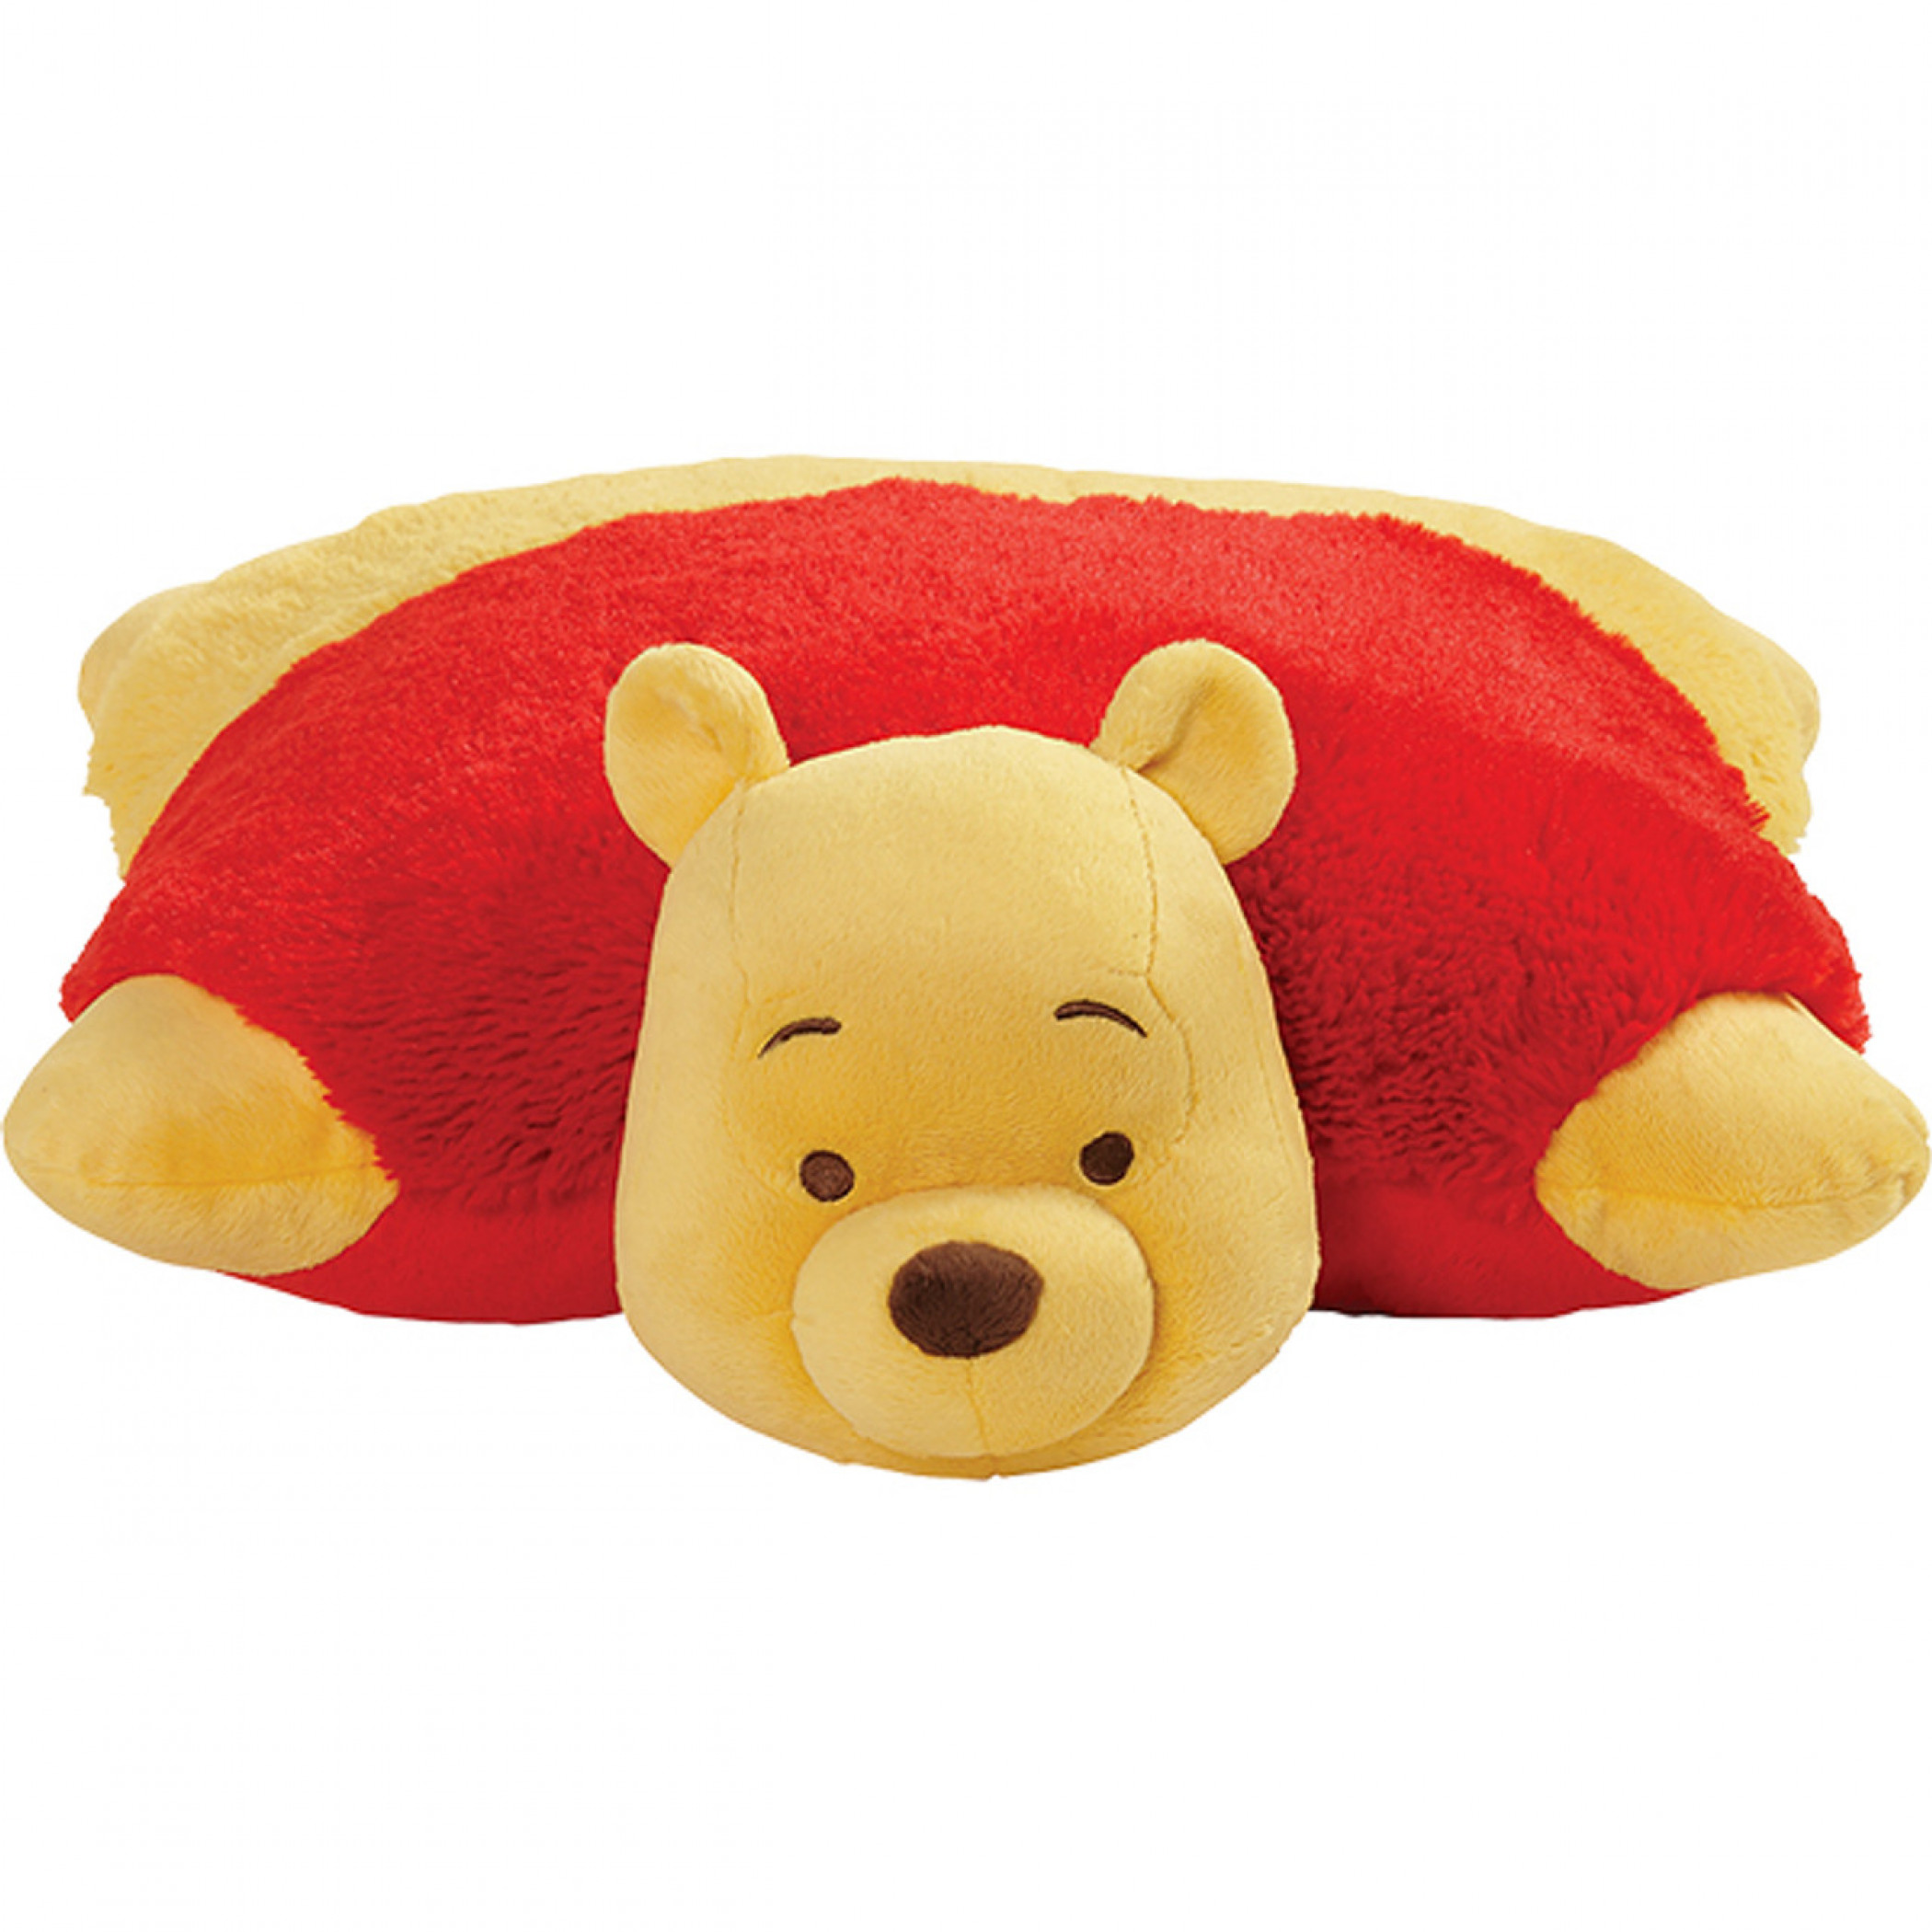 Winnie the Pooh Bear Pillow Pet Stuffed Animal Plush Toy